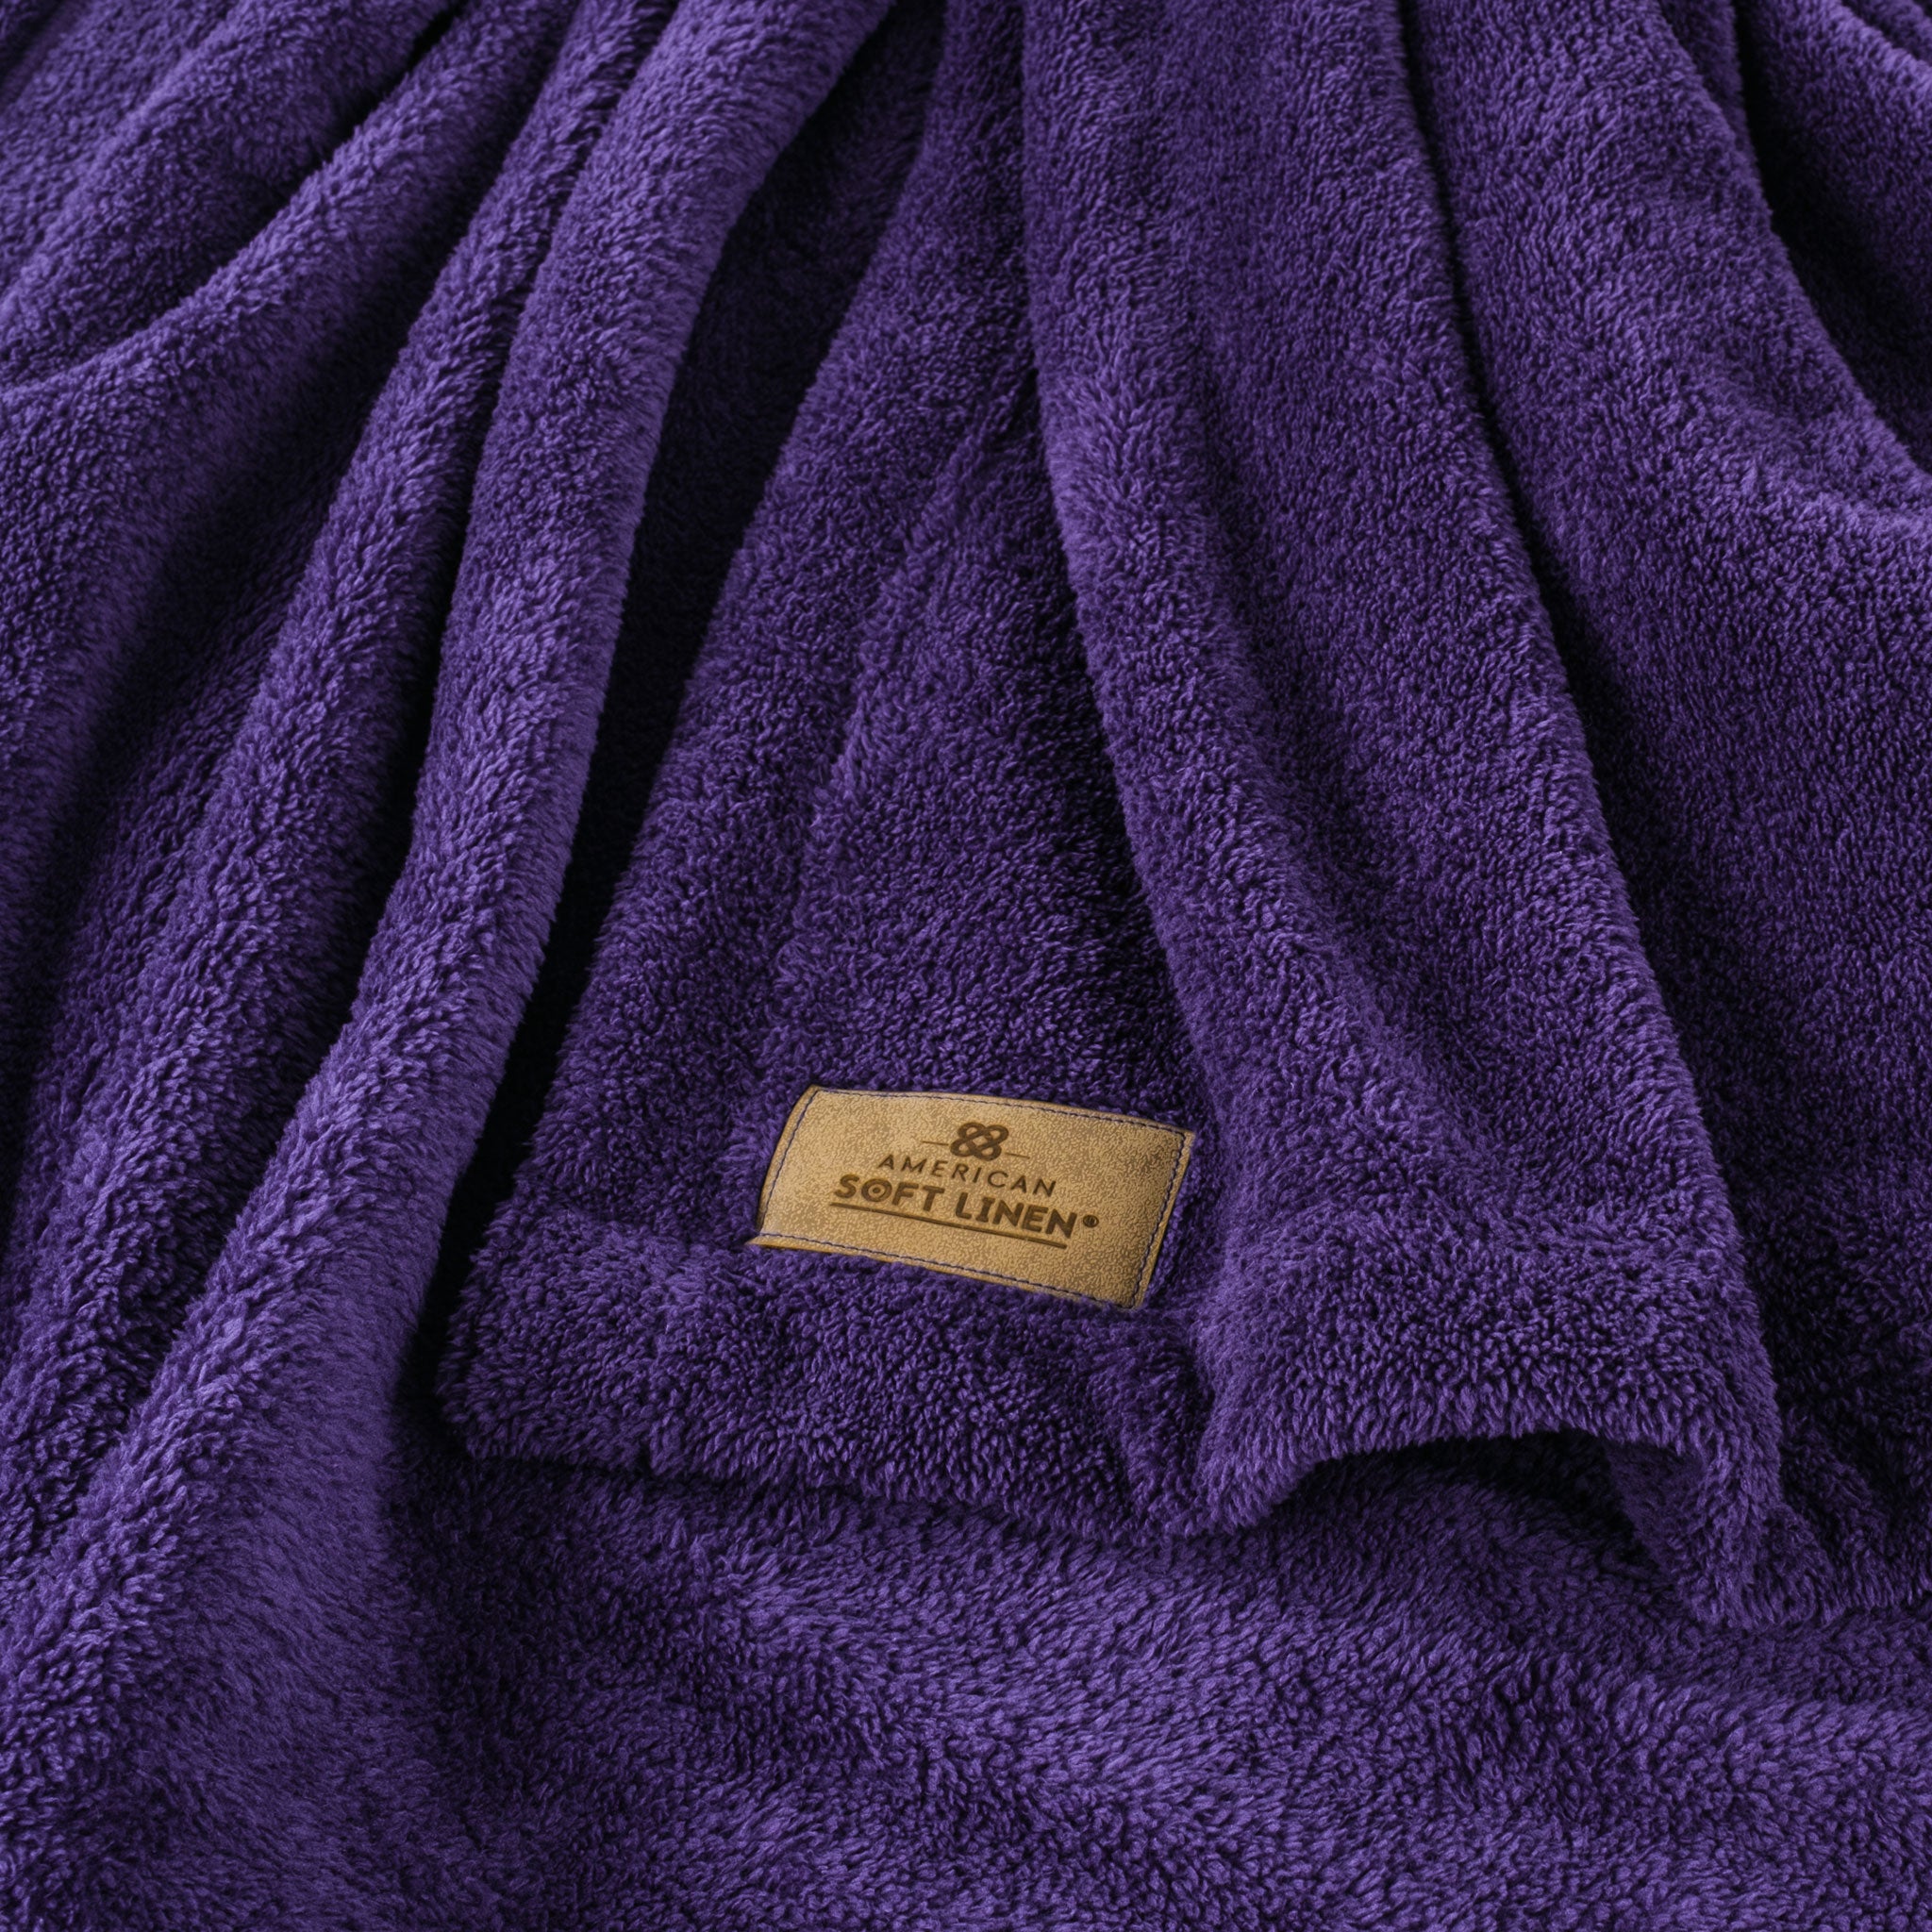 American Soft Linen - Bedding Fleece Blanket - Wholesale - 24 Set Case Pack - Throw Size 50x60 inches - Purple - 4